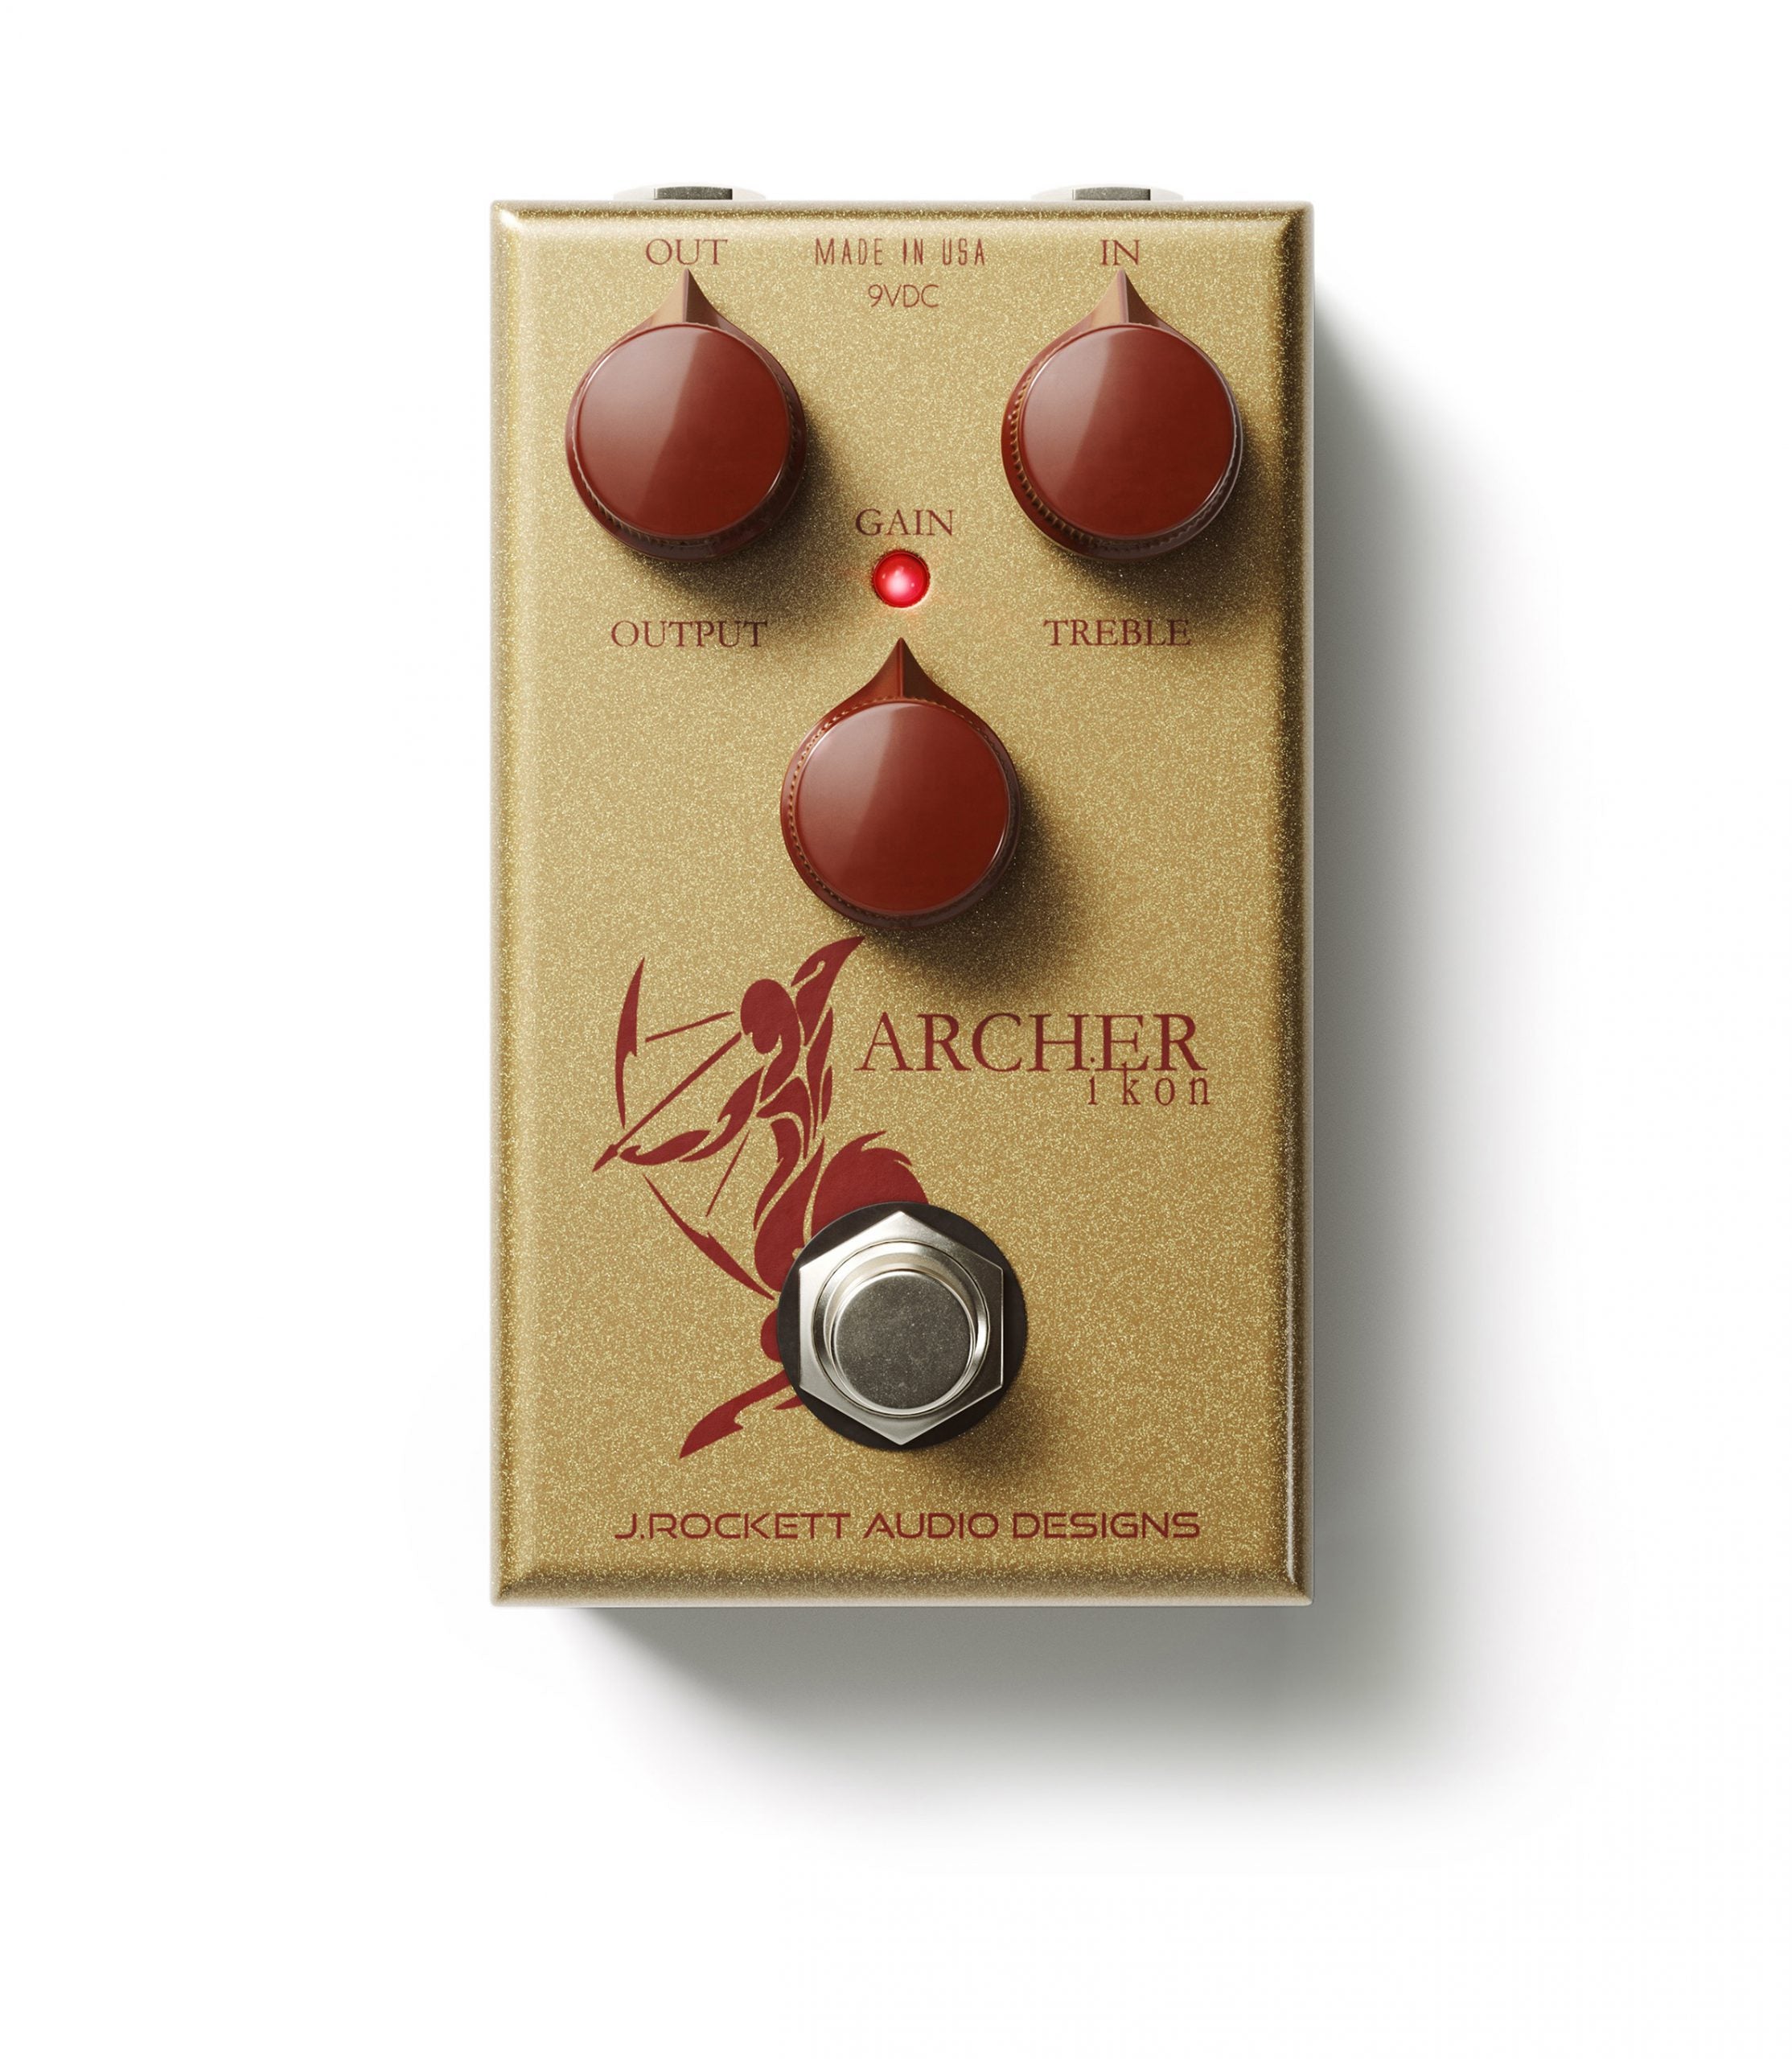 Archer ikon Klon Gold